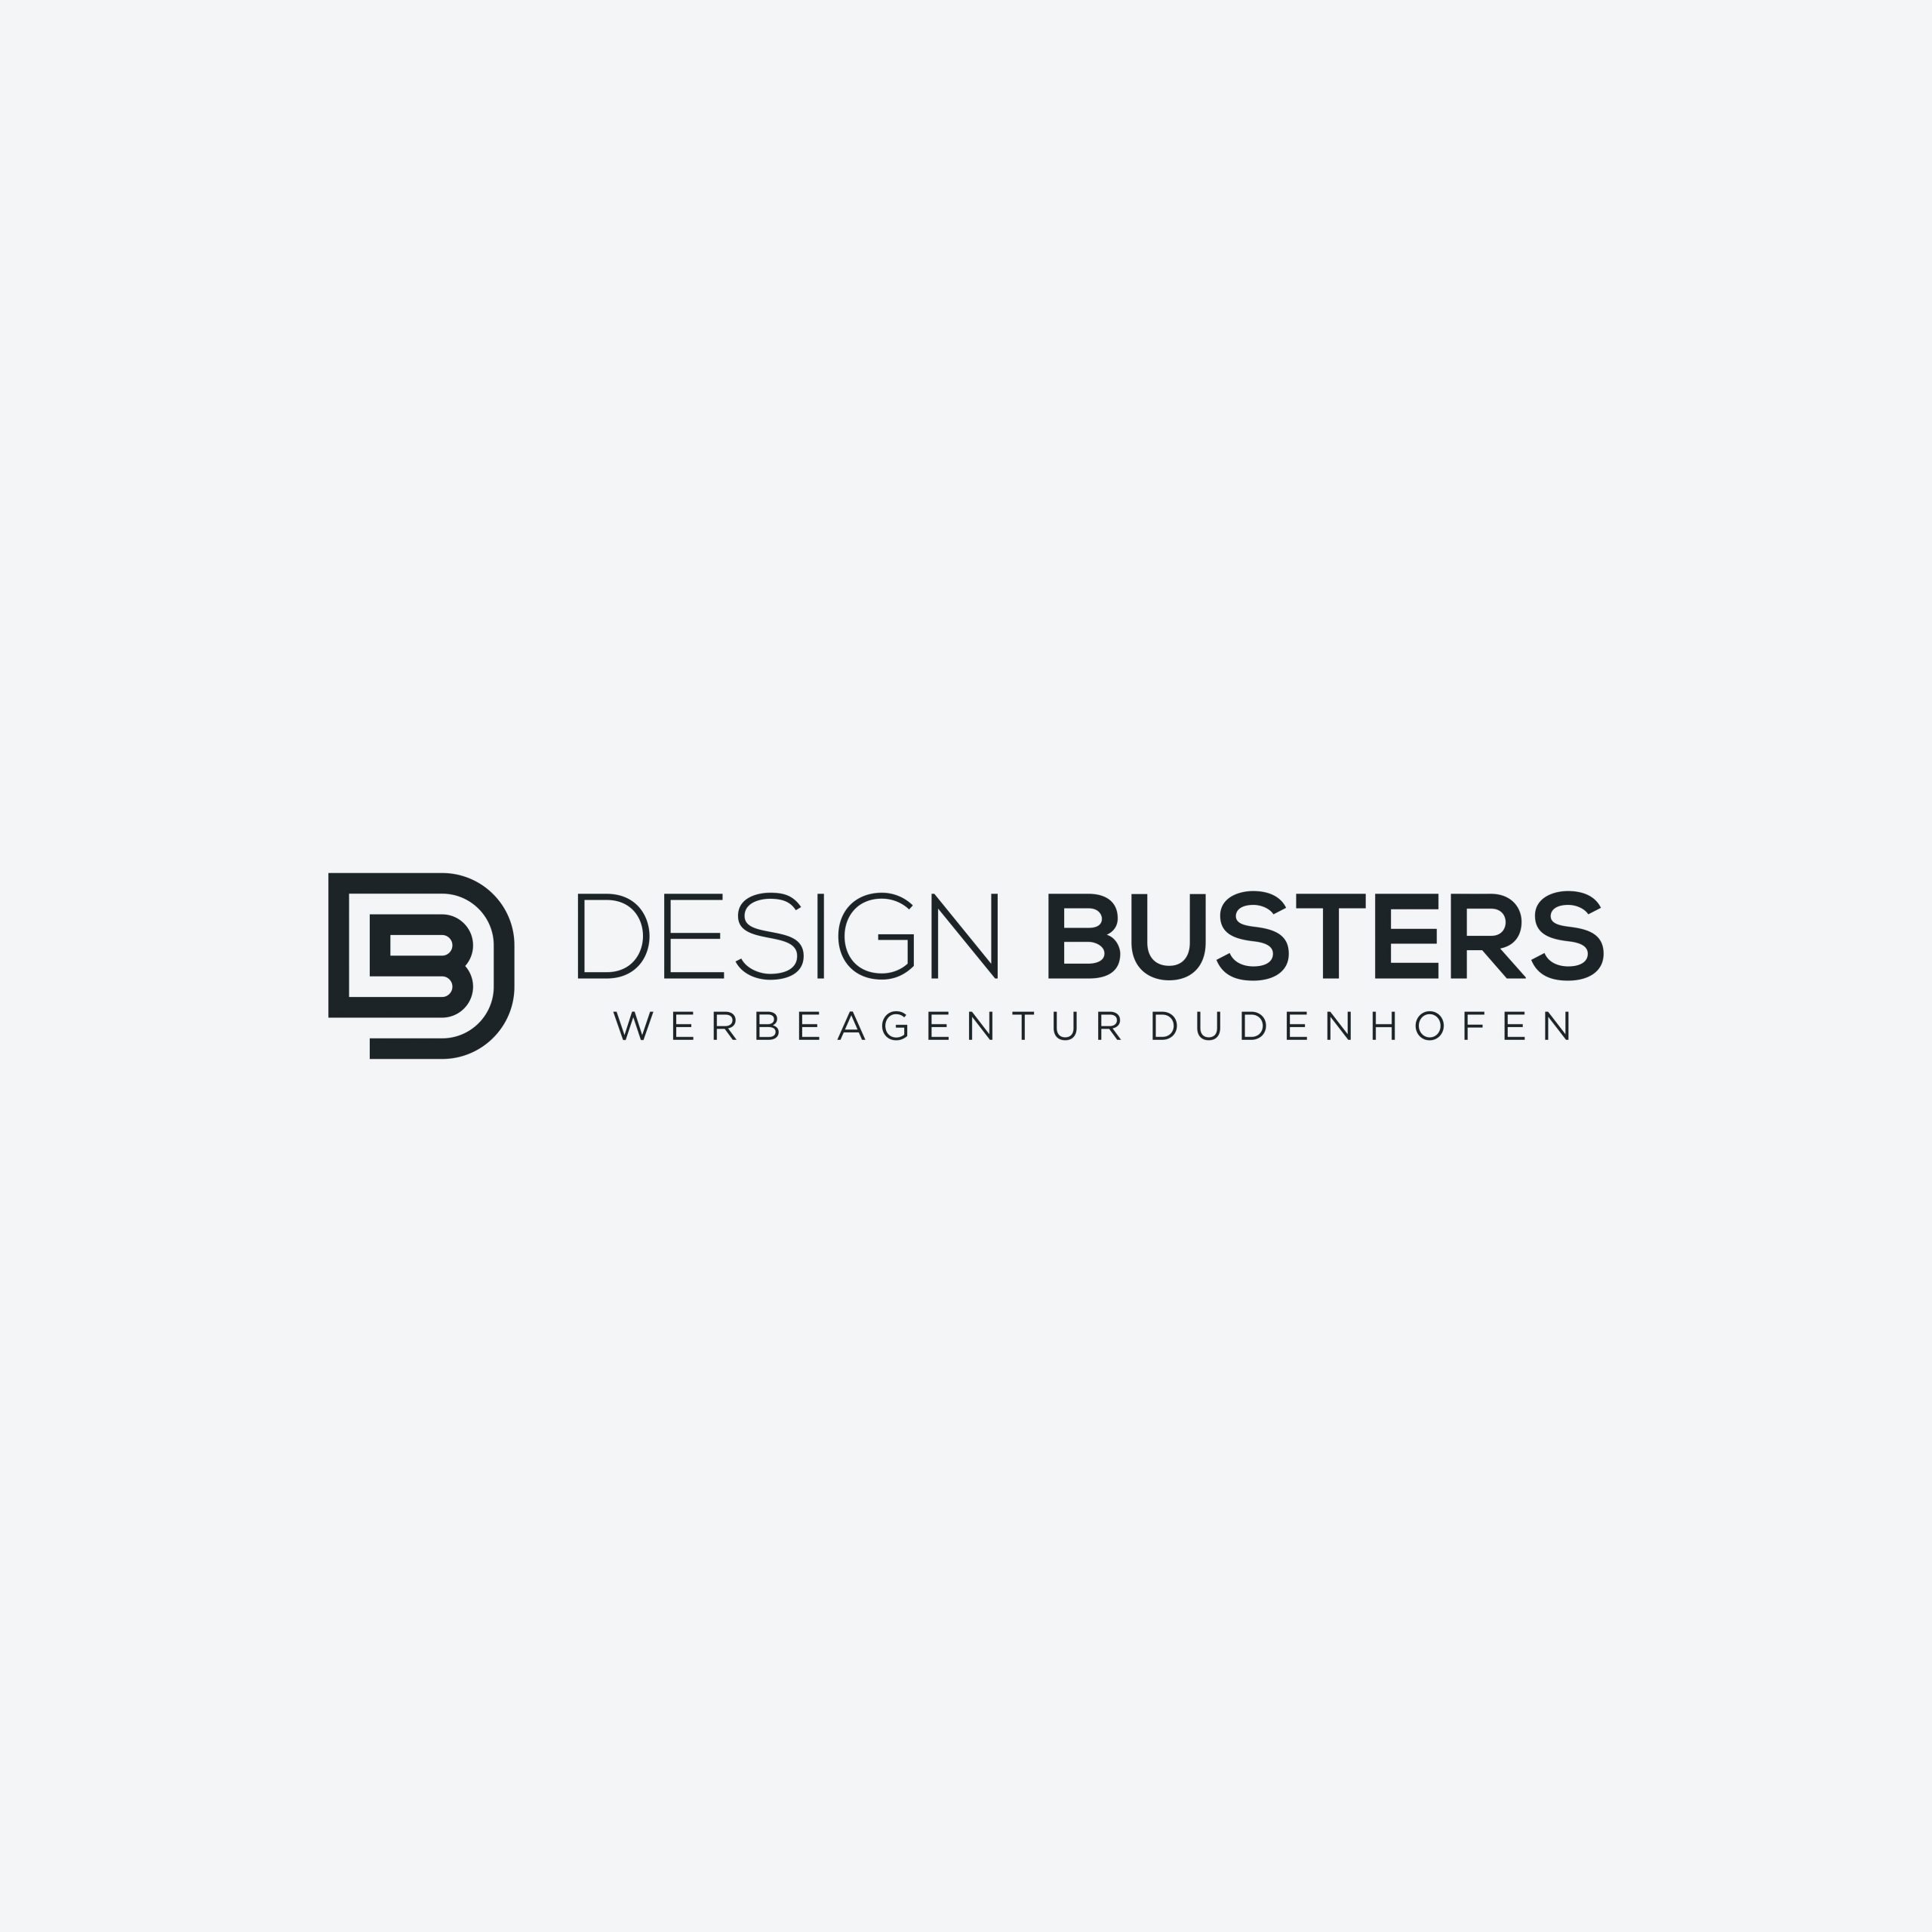 (c) Design-busters.de